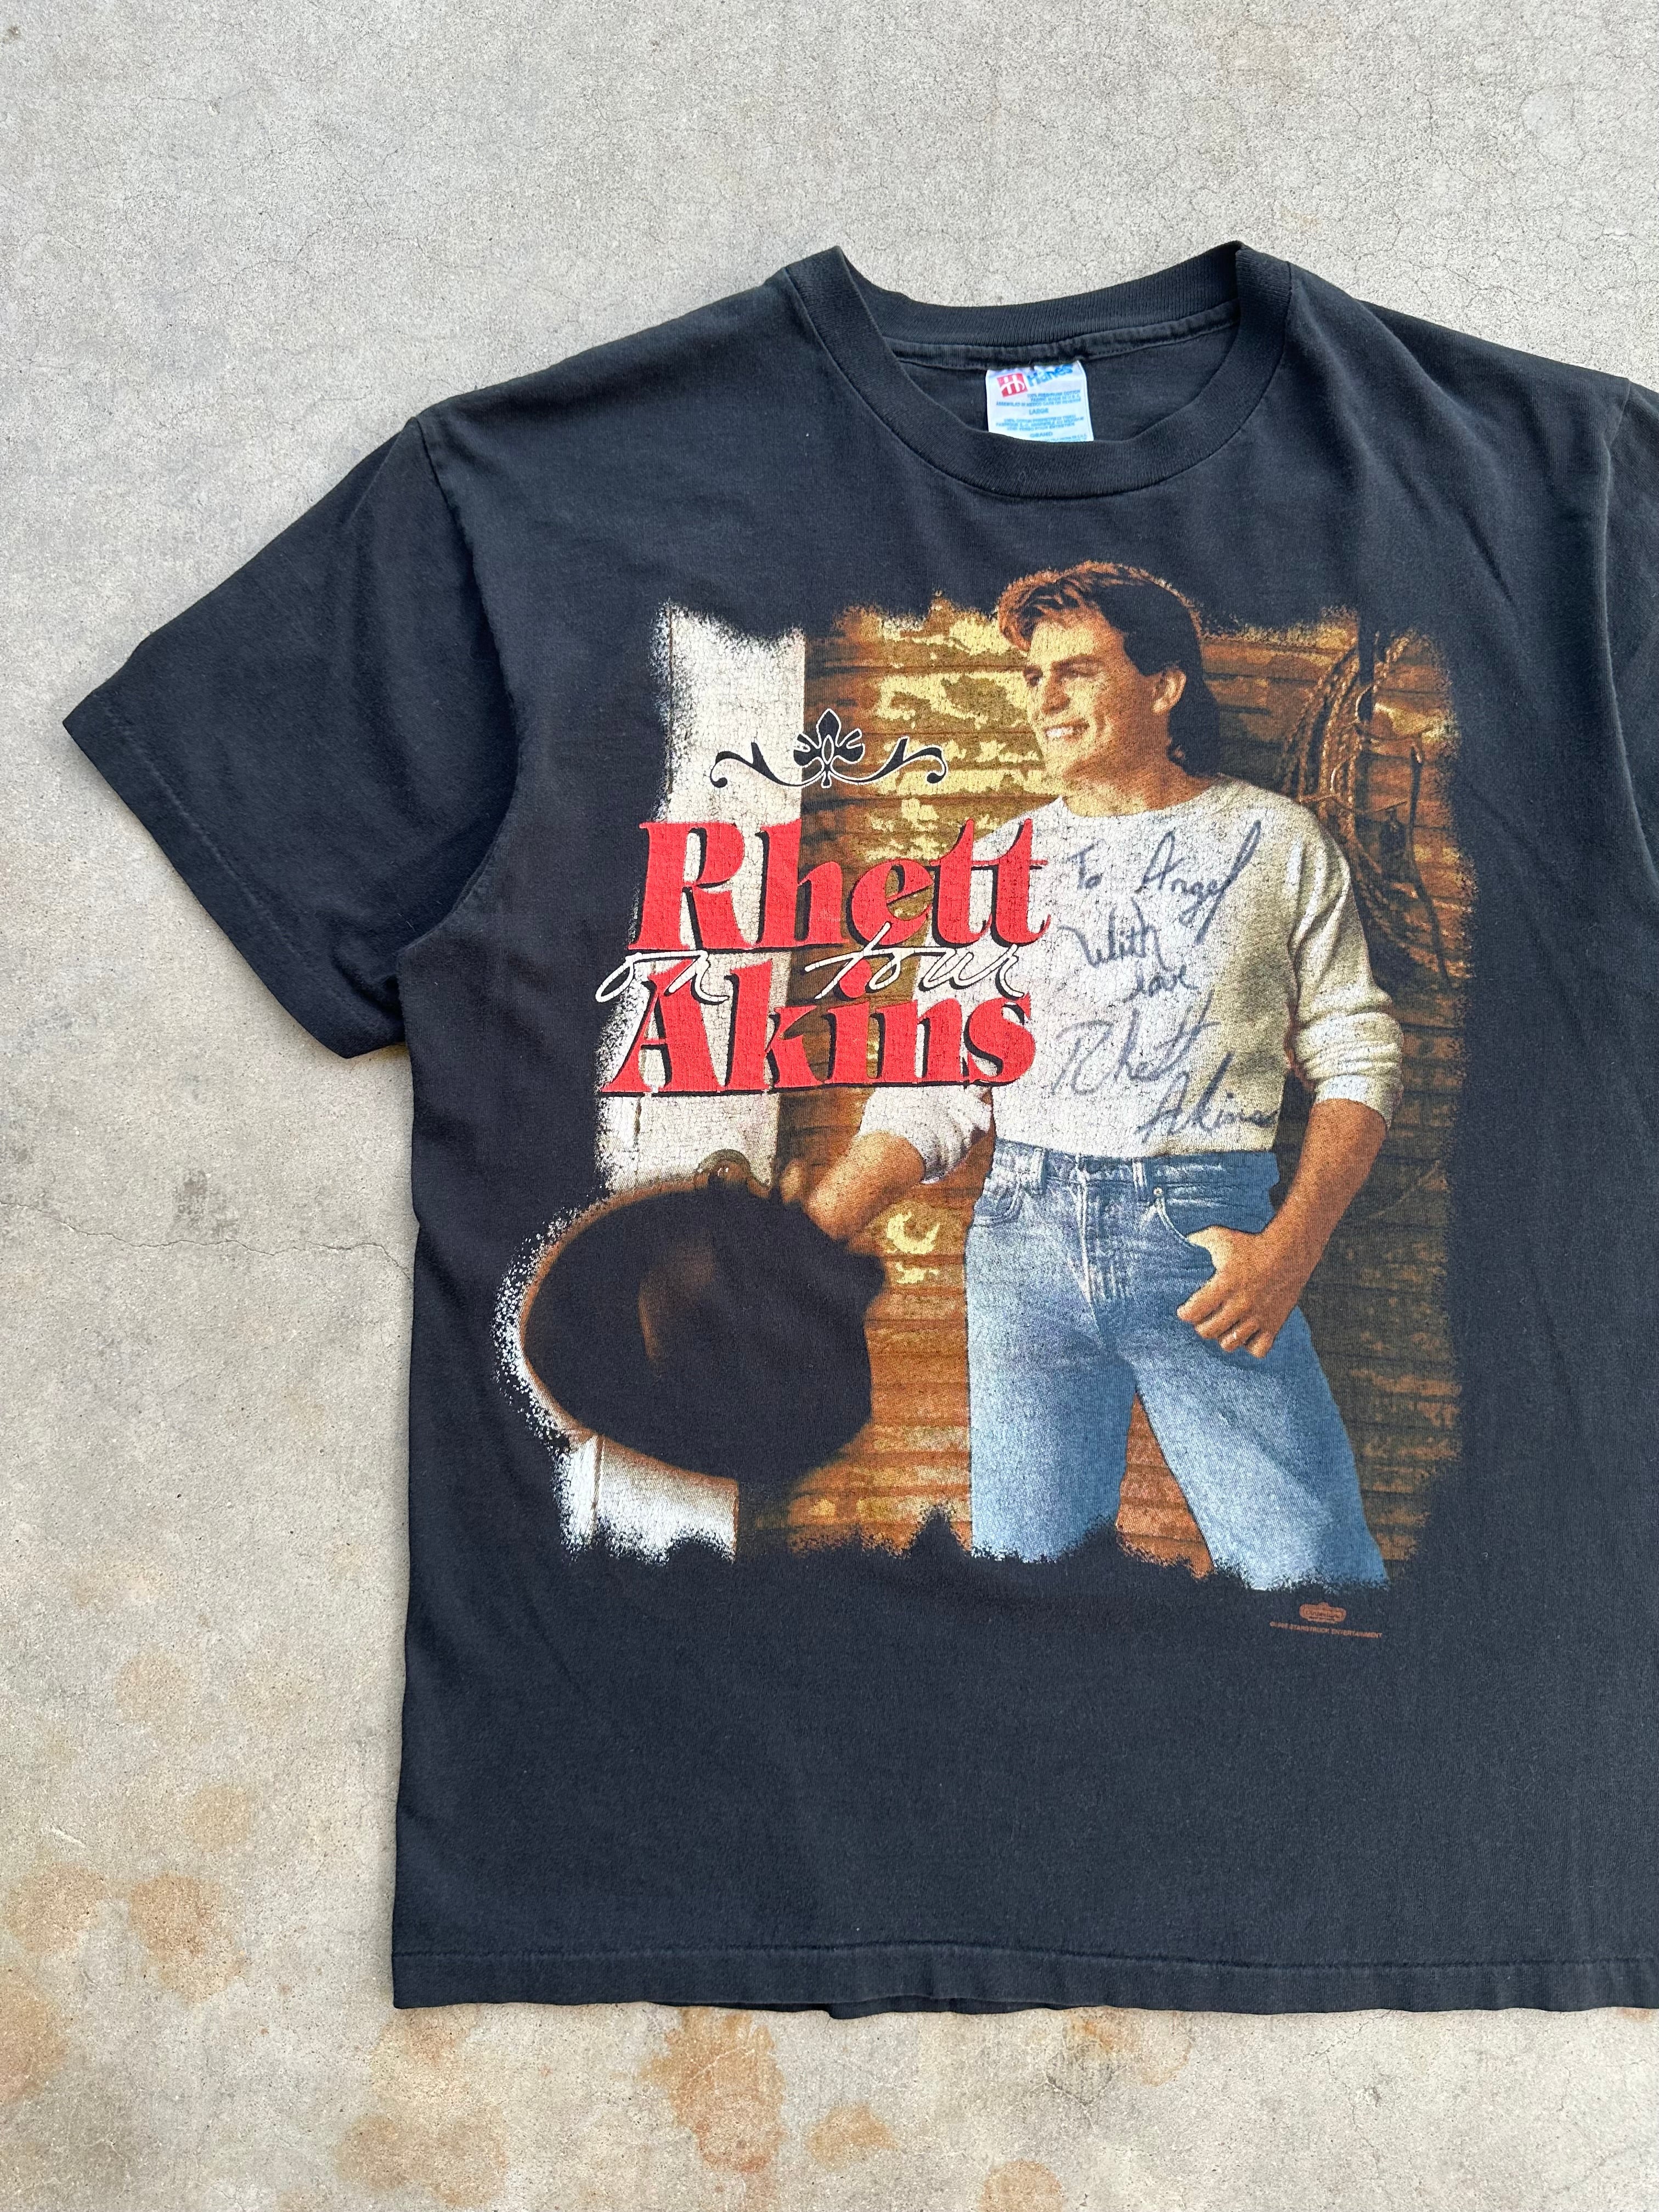 Vintage 1990’s Rhett Atkins Tour T-Shirt